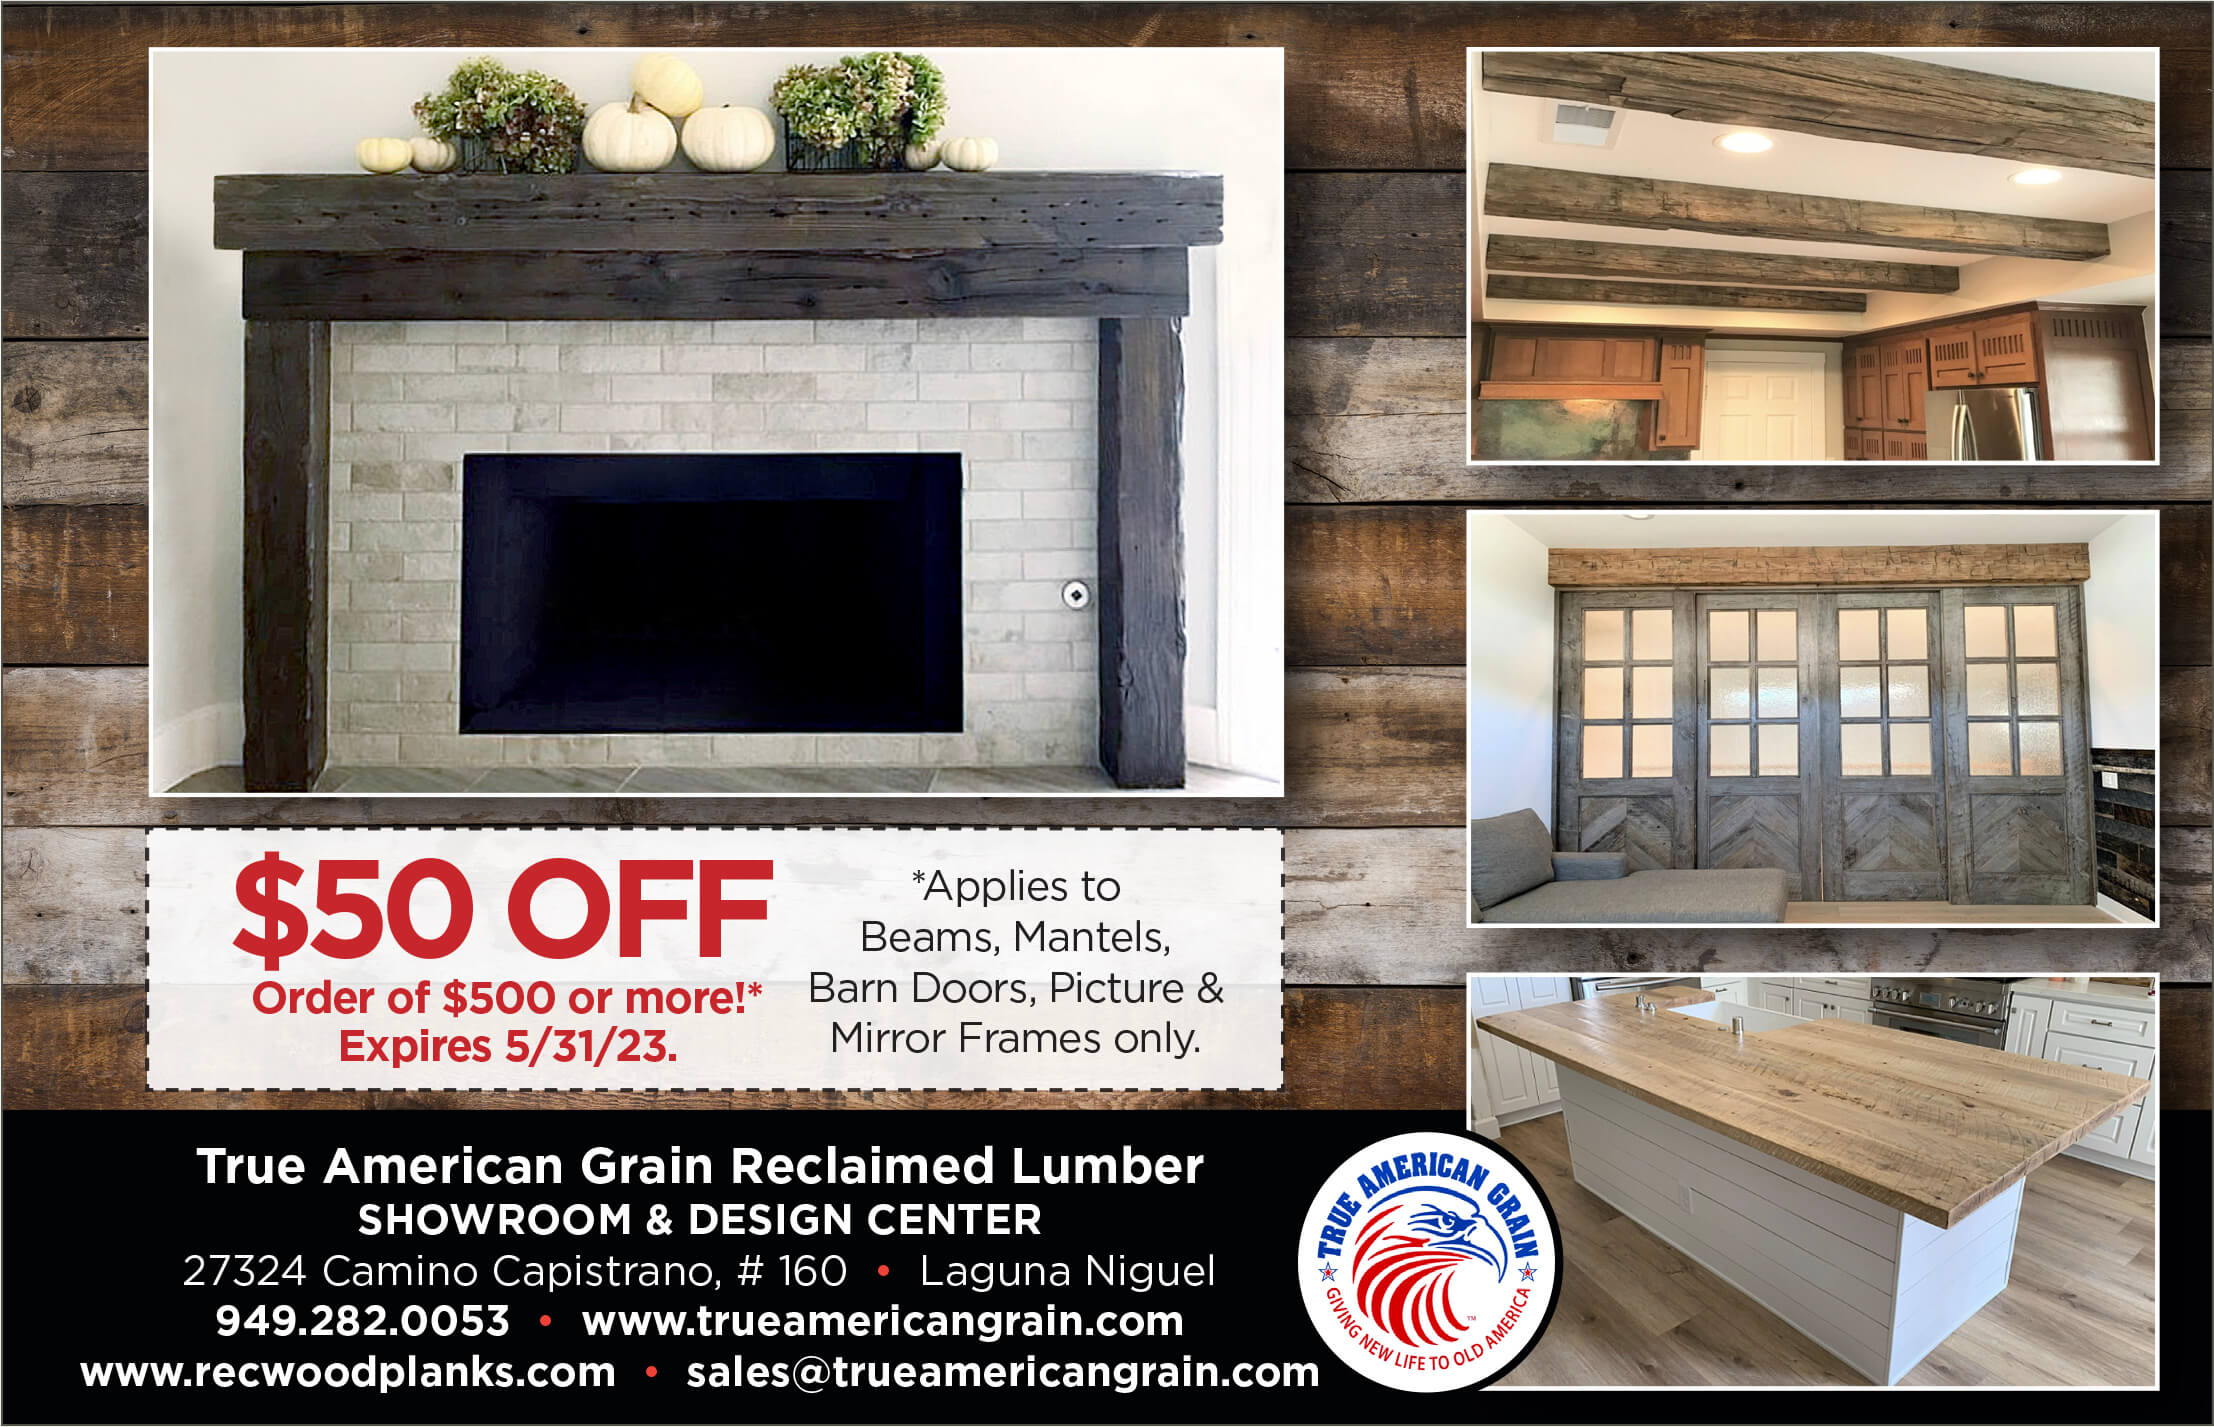 True American Grain Reclaimed Lumber